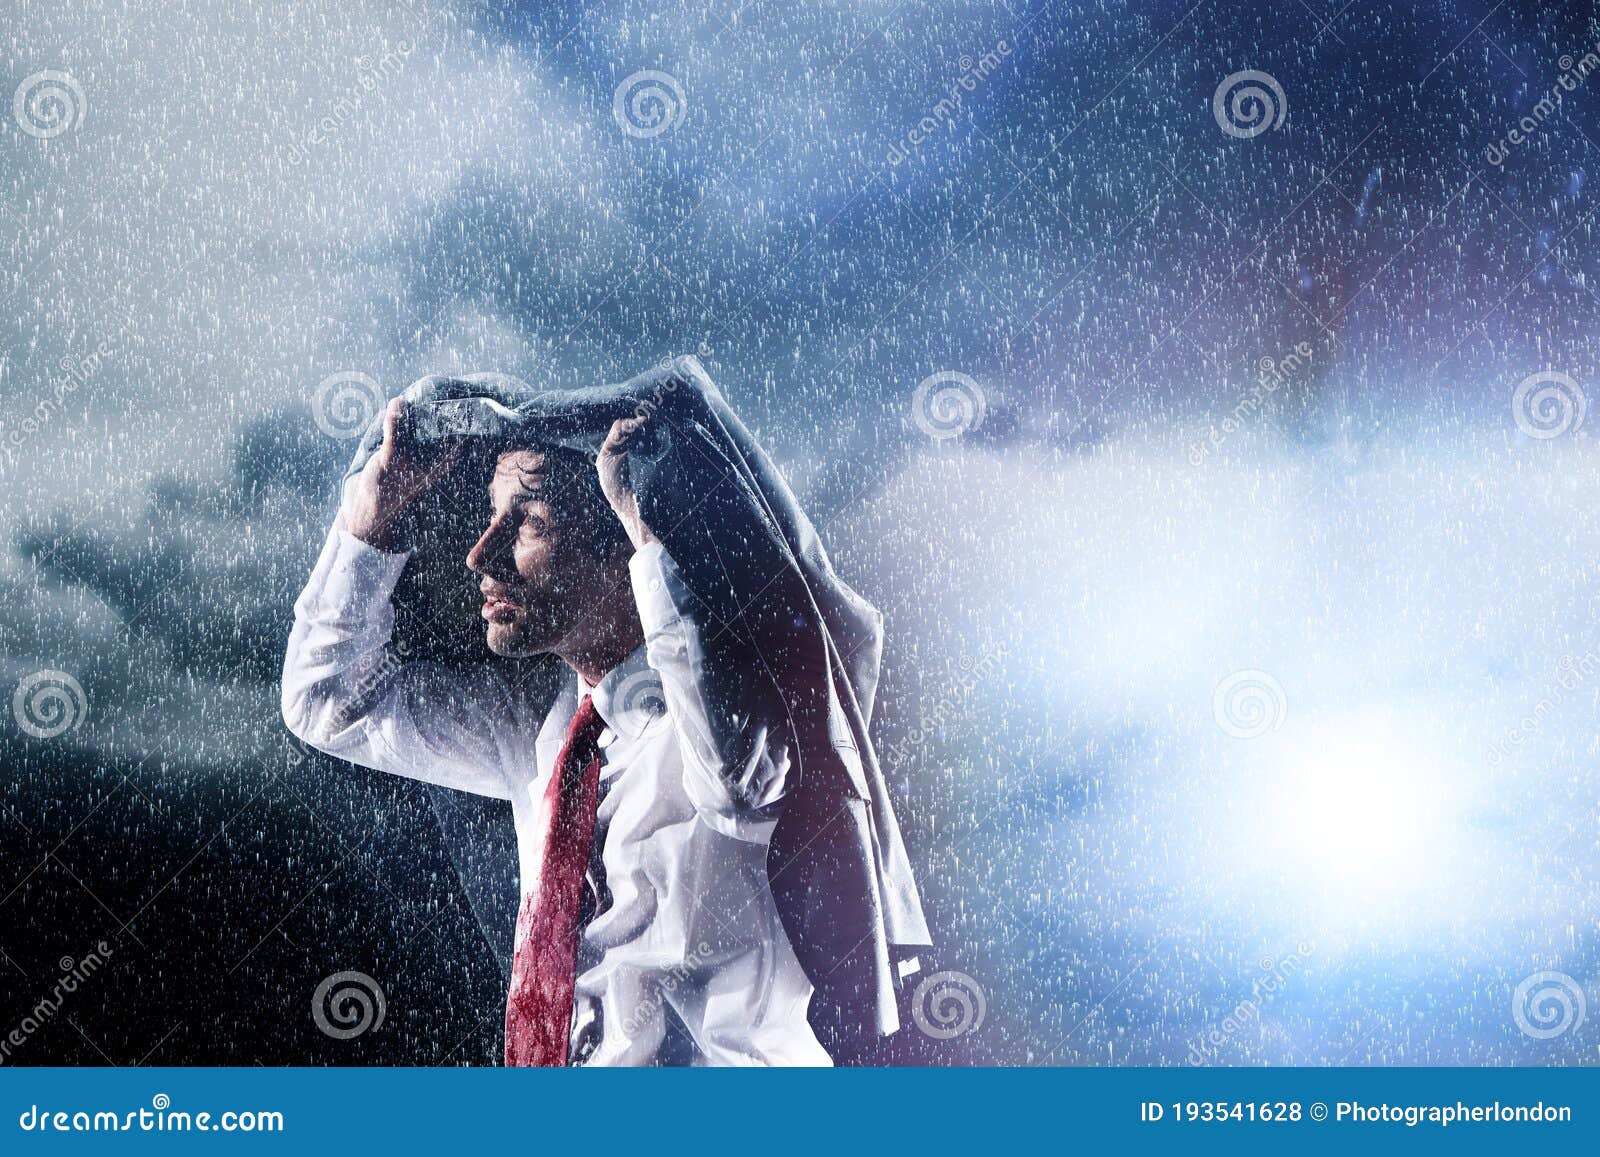 businessman caught in heavy rain hiding under his jacket